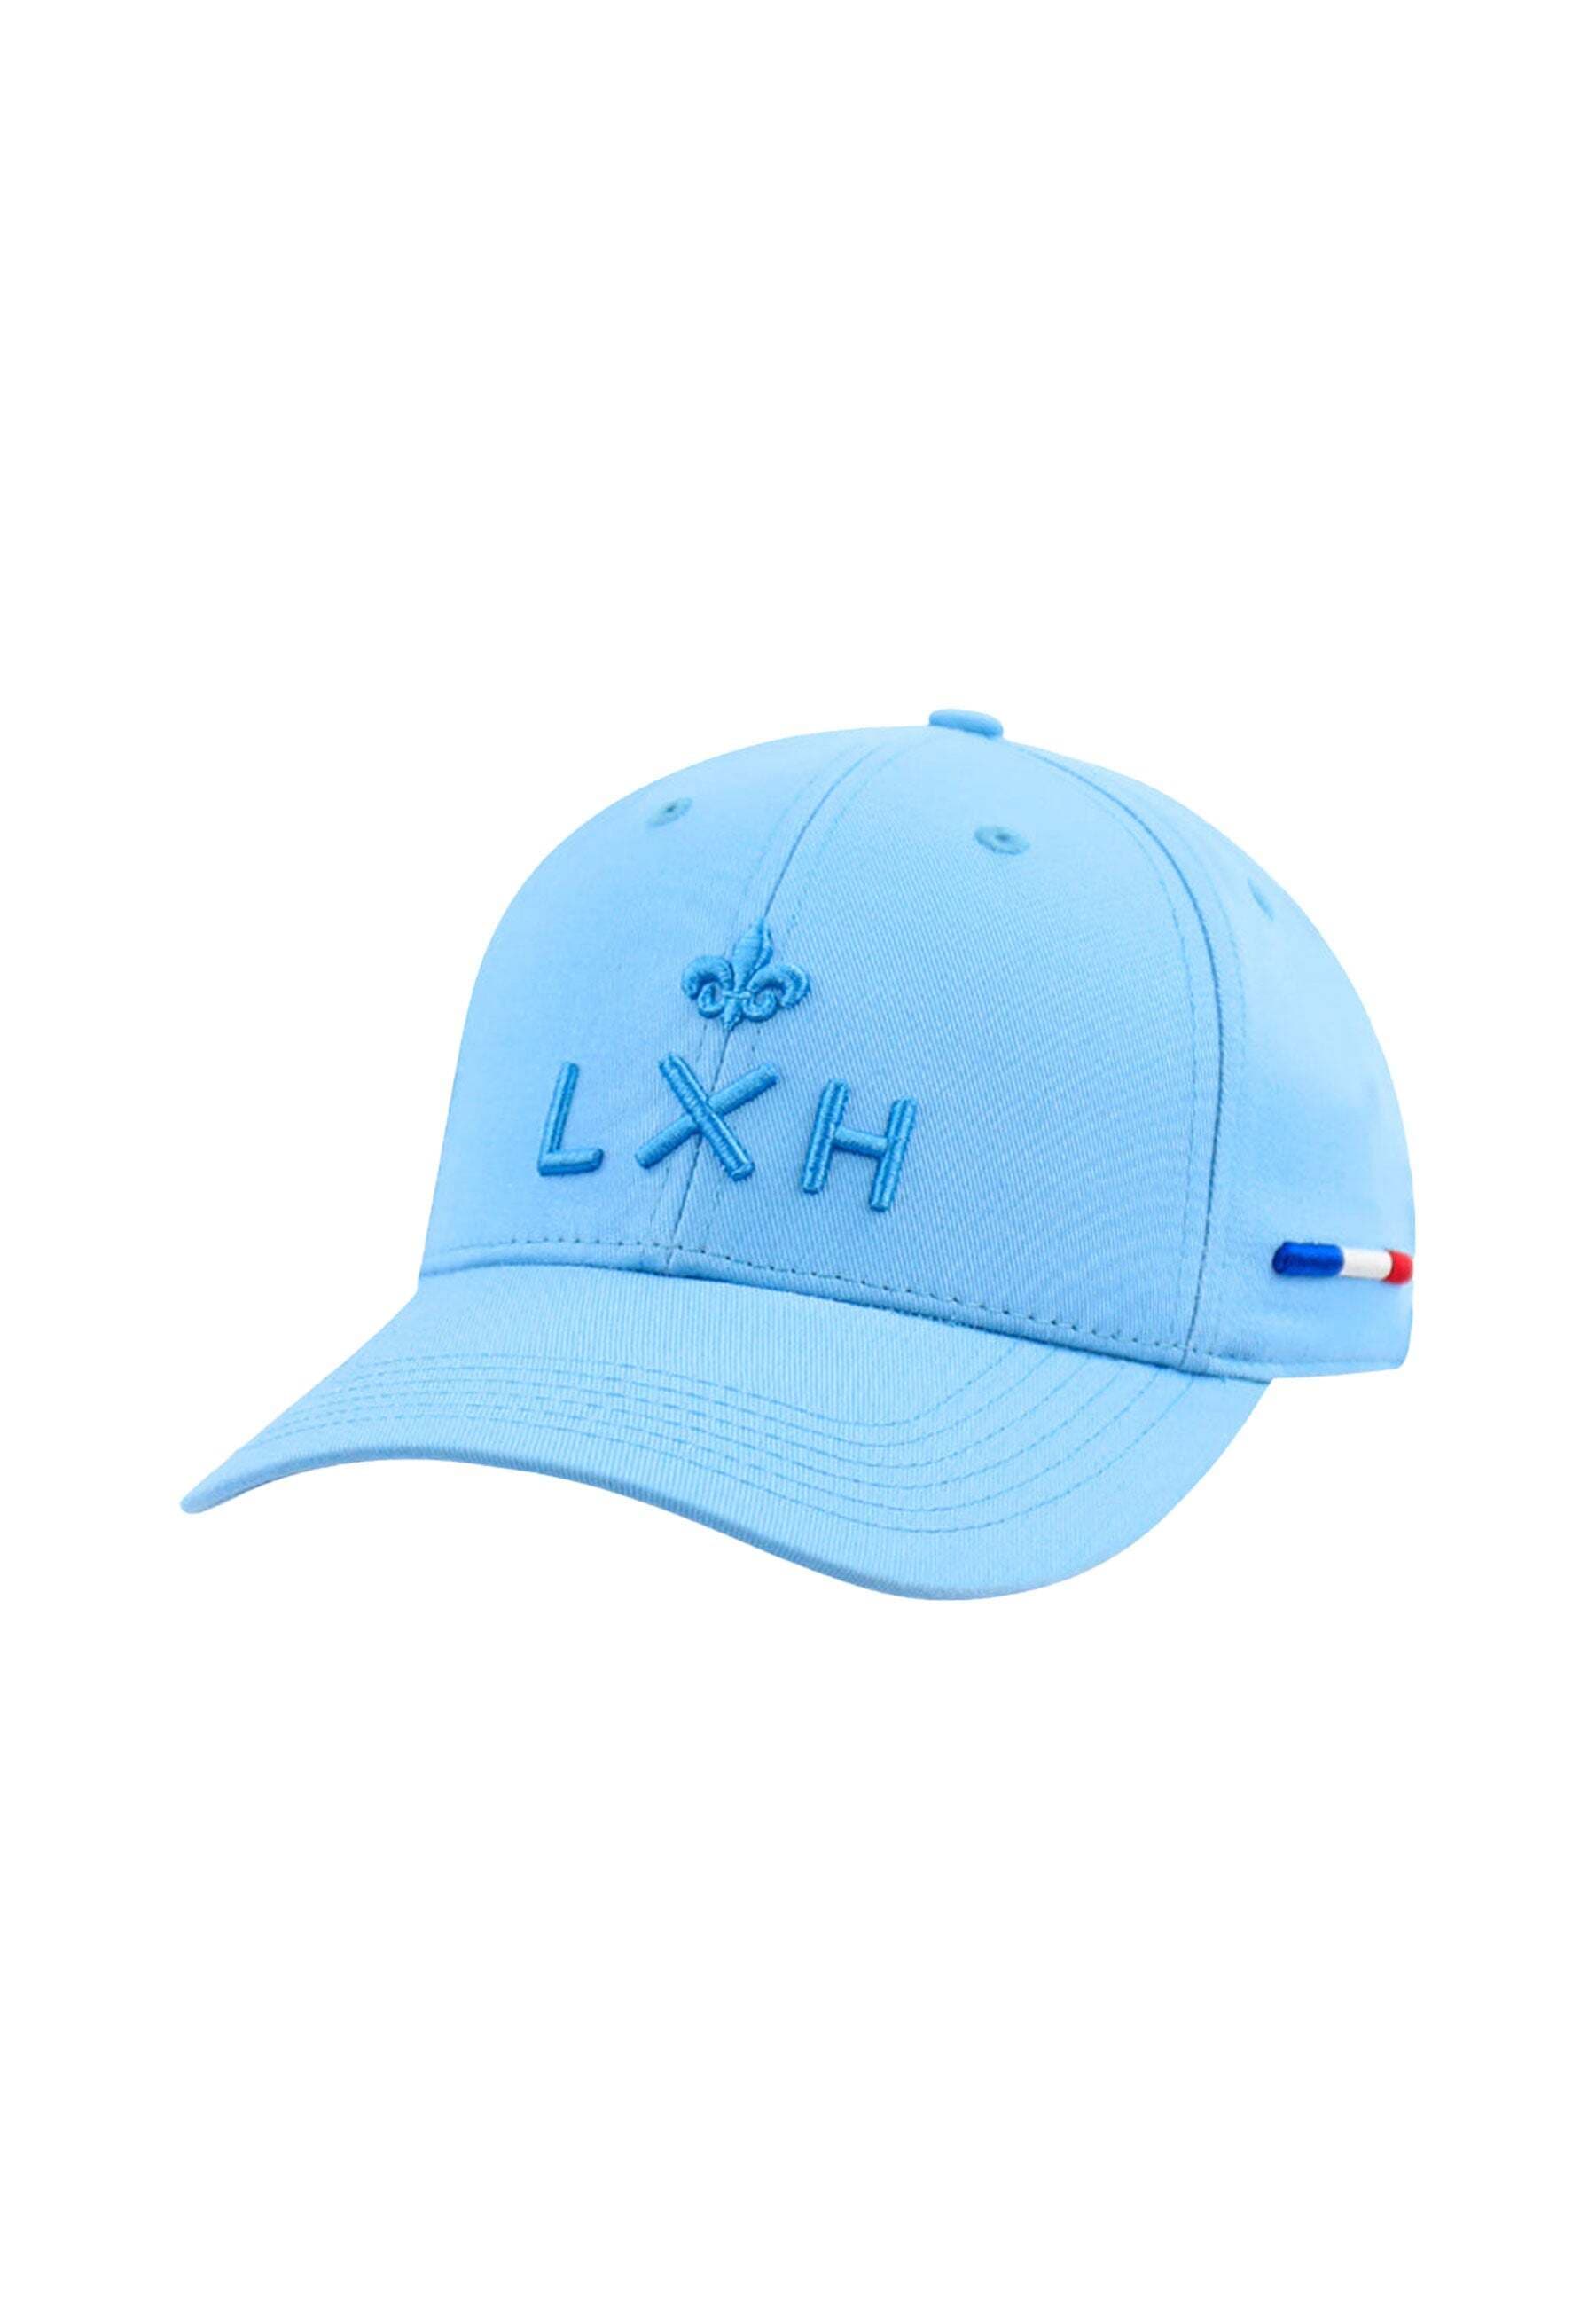 Baseball Cap »LXH Caps Casquette Pop - La Havane«